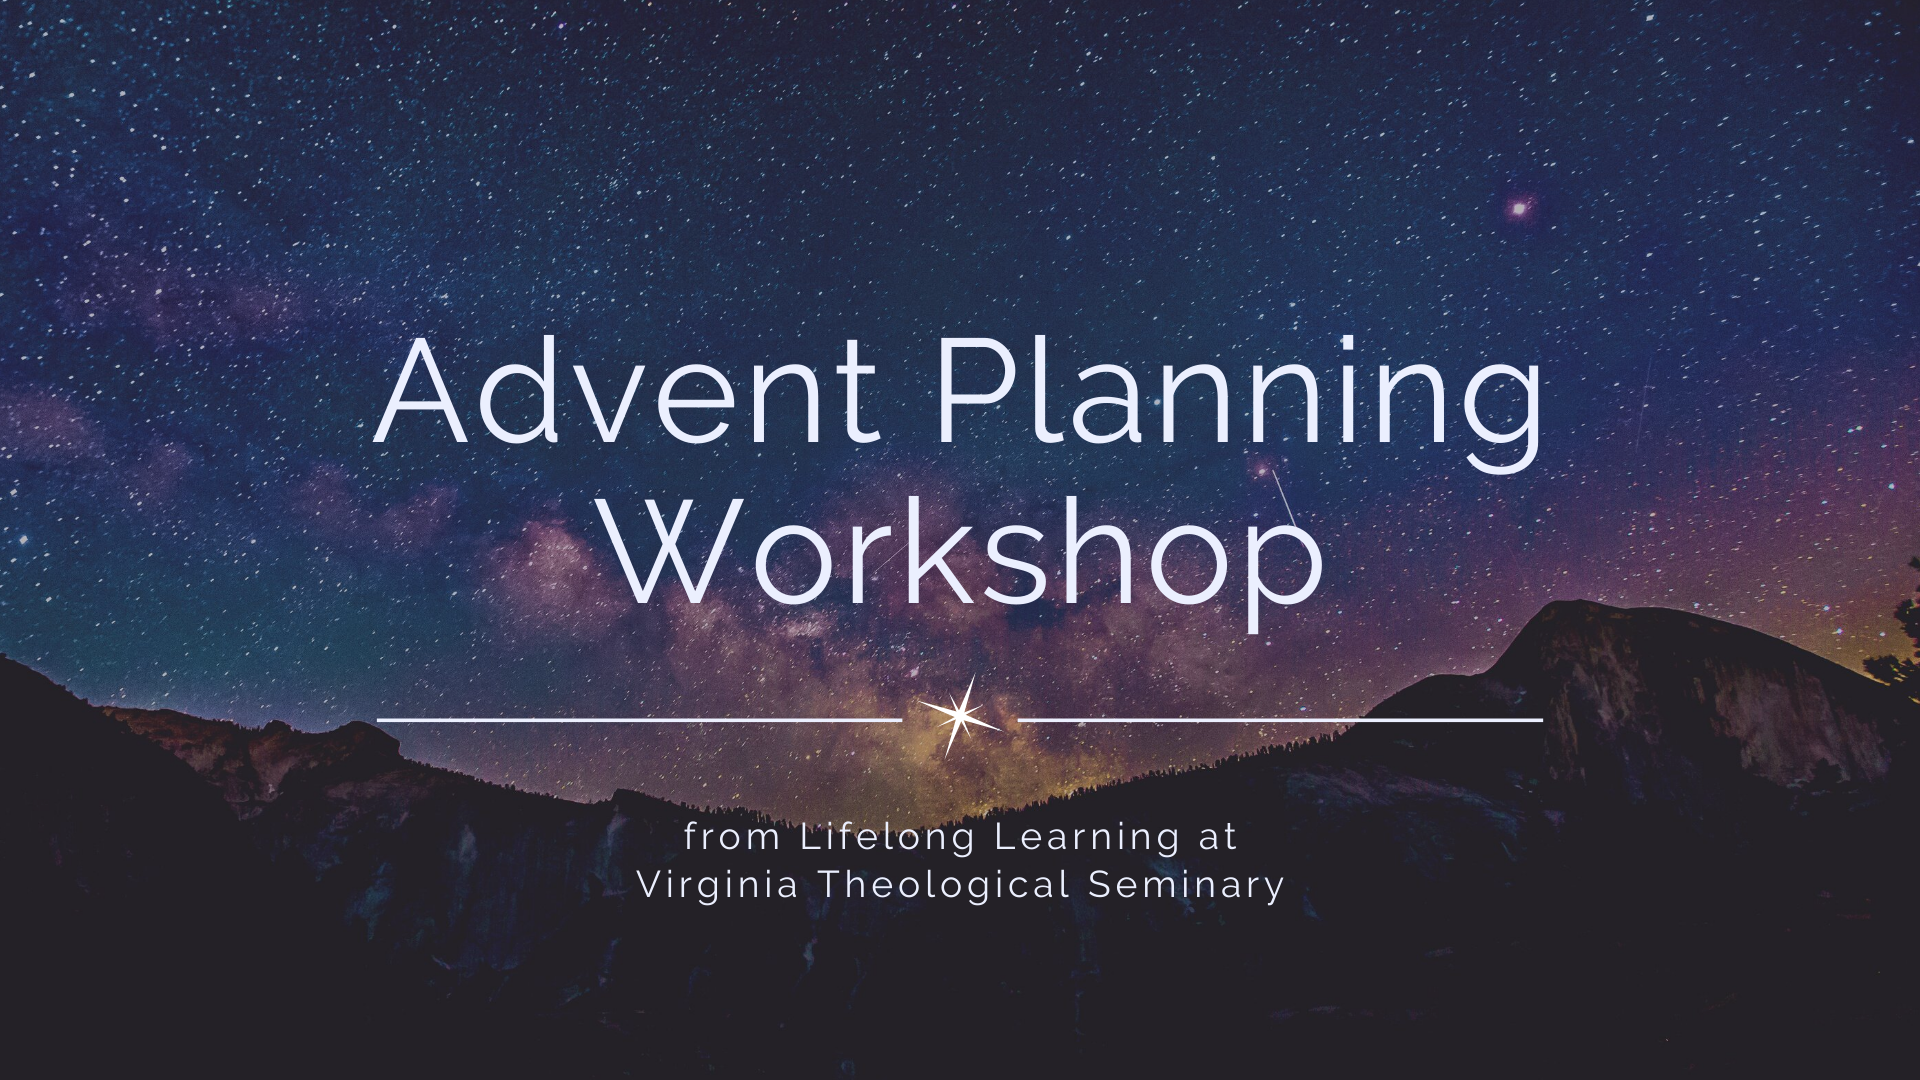 Night sky, words Advent Planning Workshop